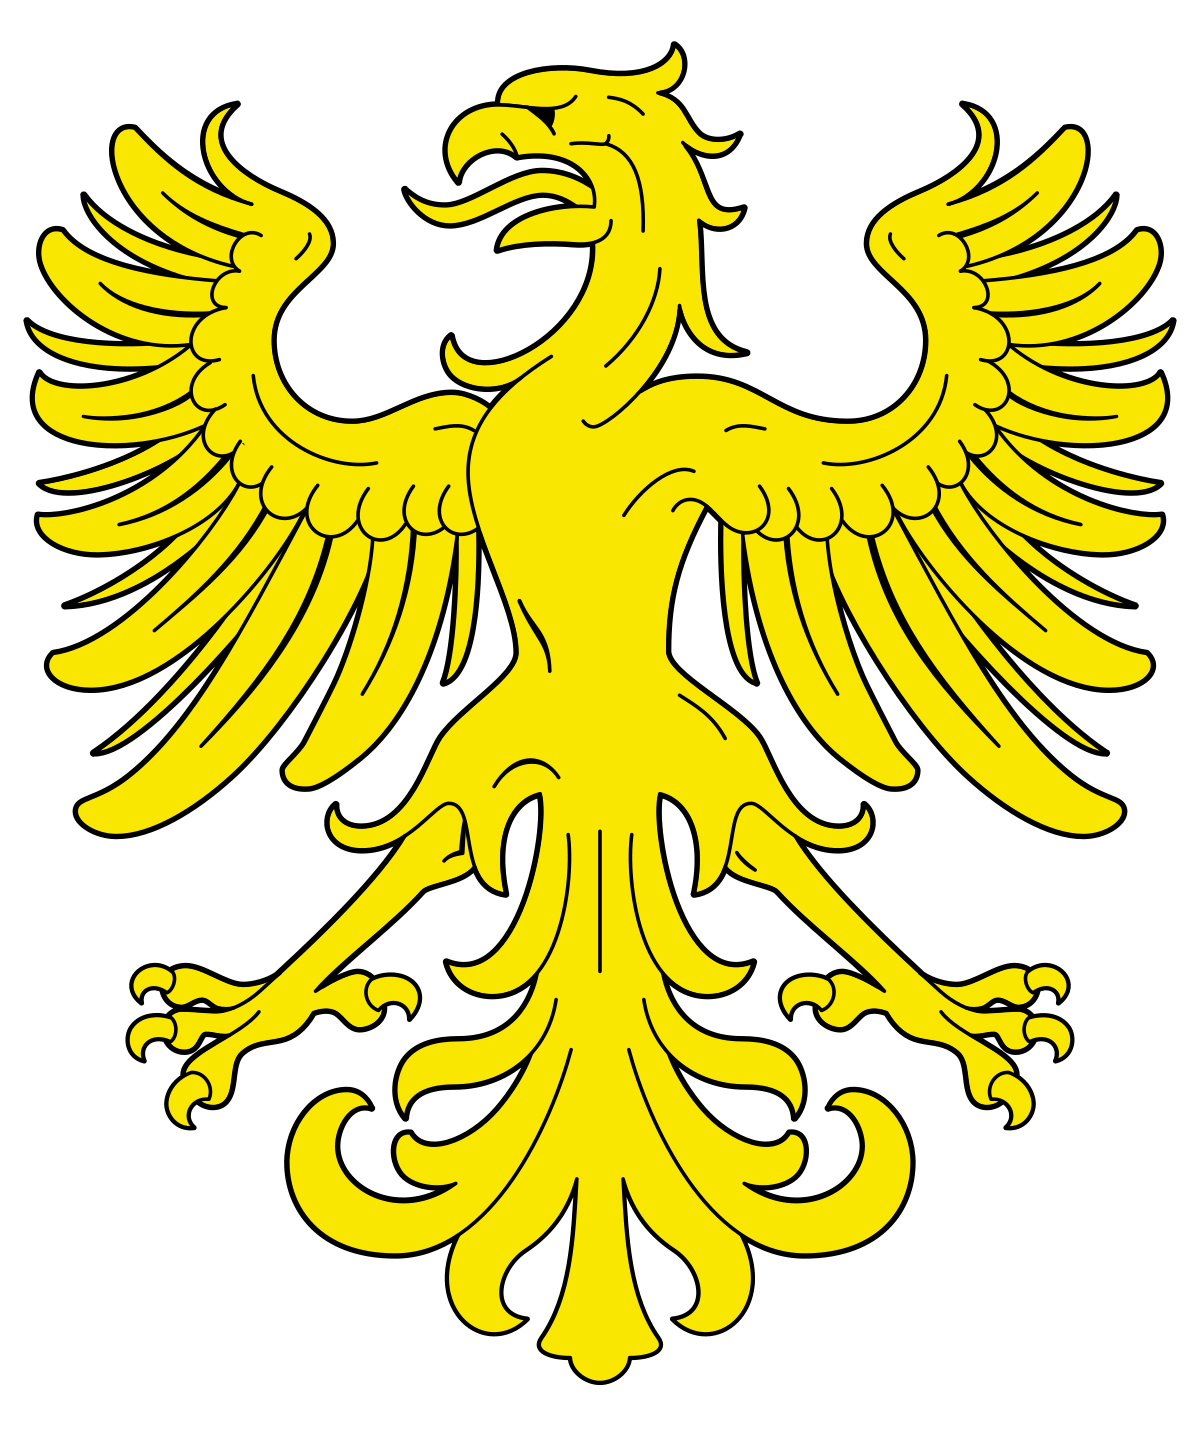 Águila (heráldica) - Wikipedia, la enciclopedia libre